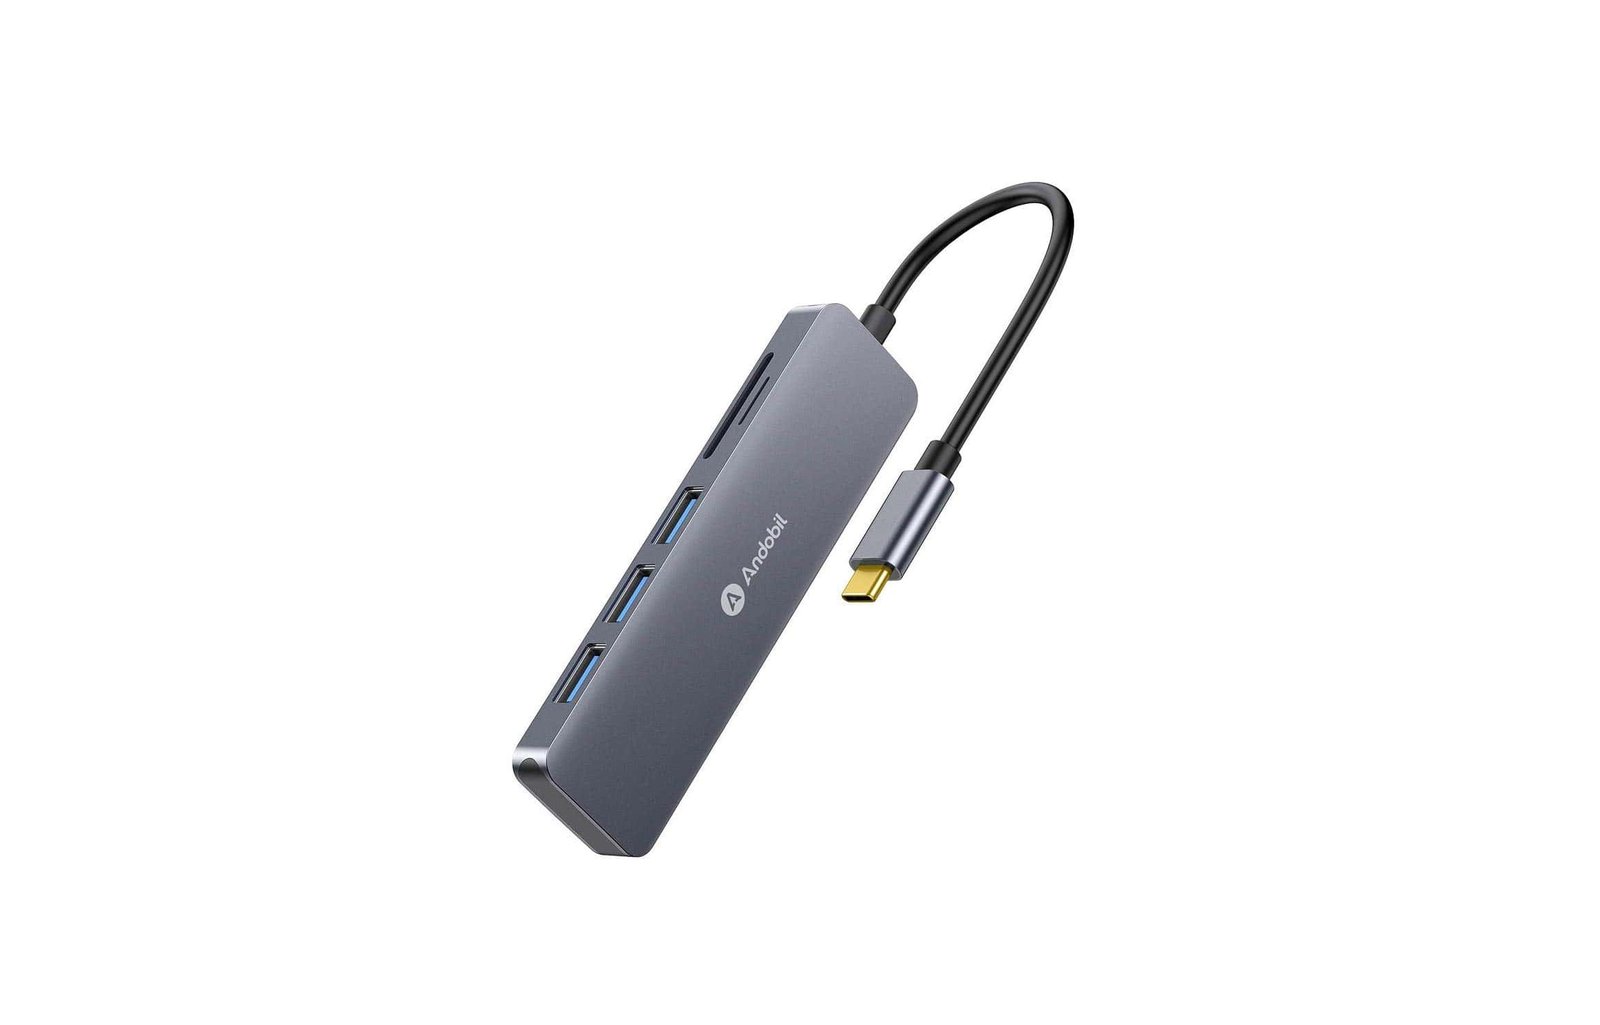 _andobil USB C Hub Adapter-min (1)